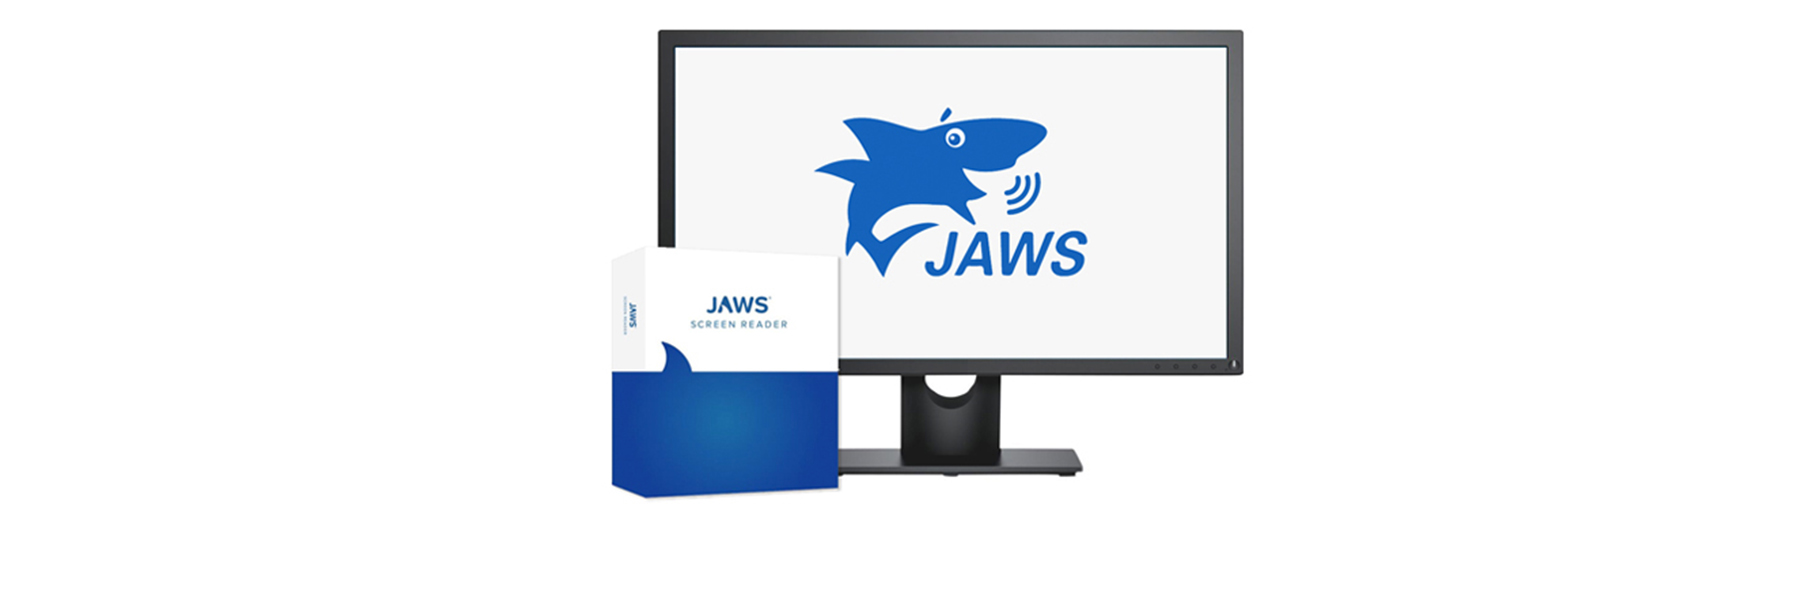 Abbildung des Jaws Logos